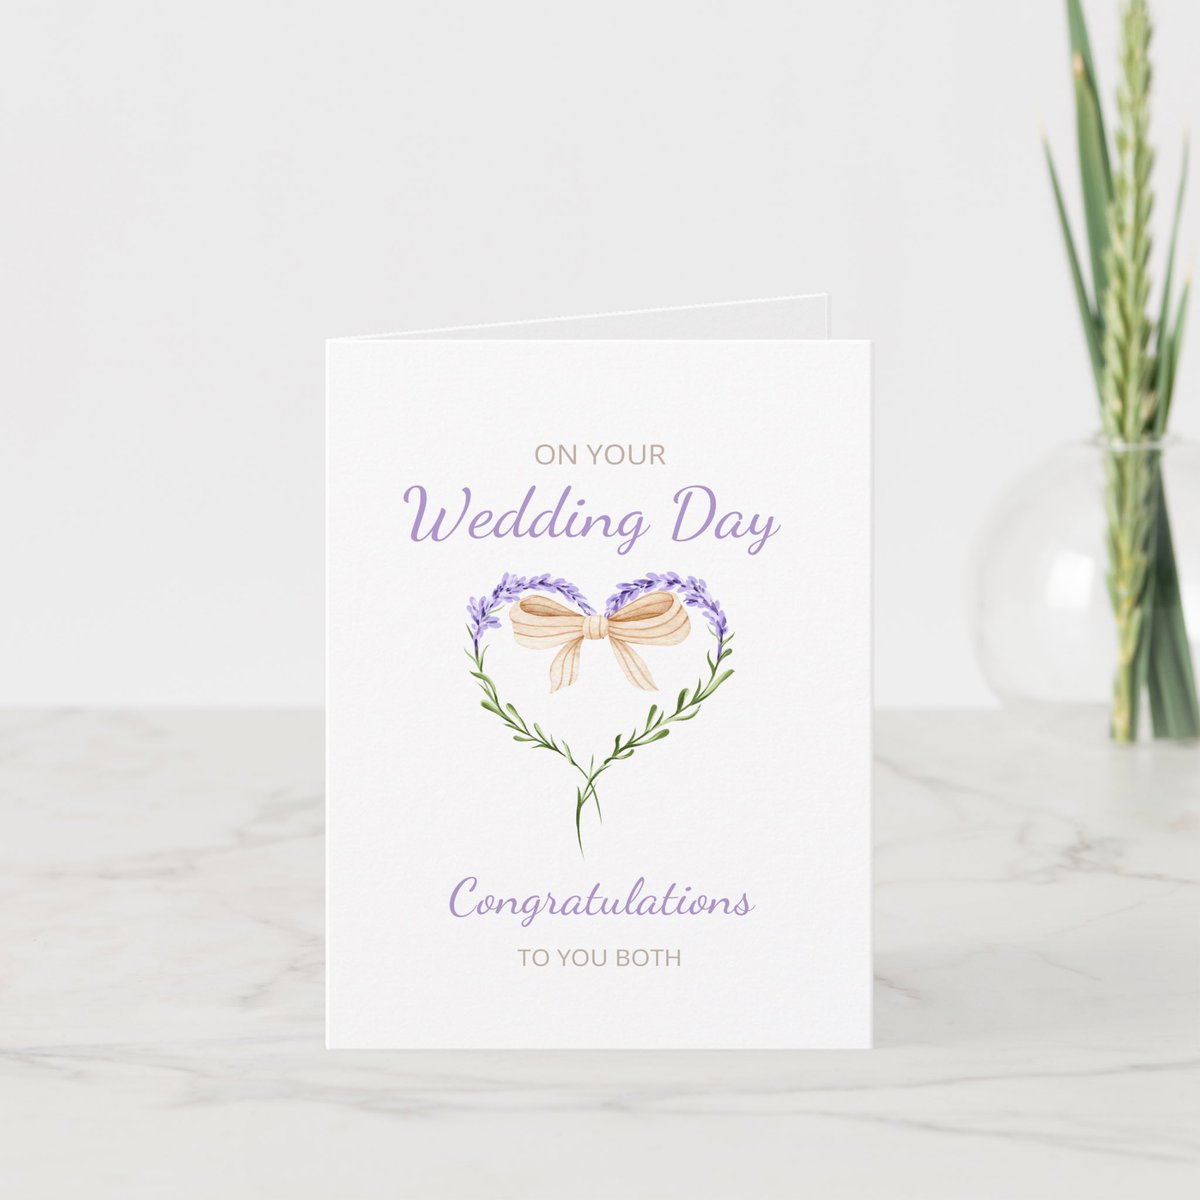 Purple Lavender Cute Heart Shape Wedding Card zazzle.co.uk/z/taxqsa7v?rf=… via @zazzle
Lavender Wedding Theme Trend: Heart Shaped Elegance. Order this card today!#lavenderwedding #weddingcard #lavendertheme #lavenderweddingtheme #lavenderweddingdecor #lavenderweddingcard #lavender